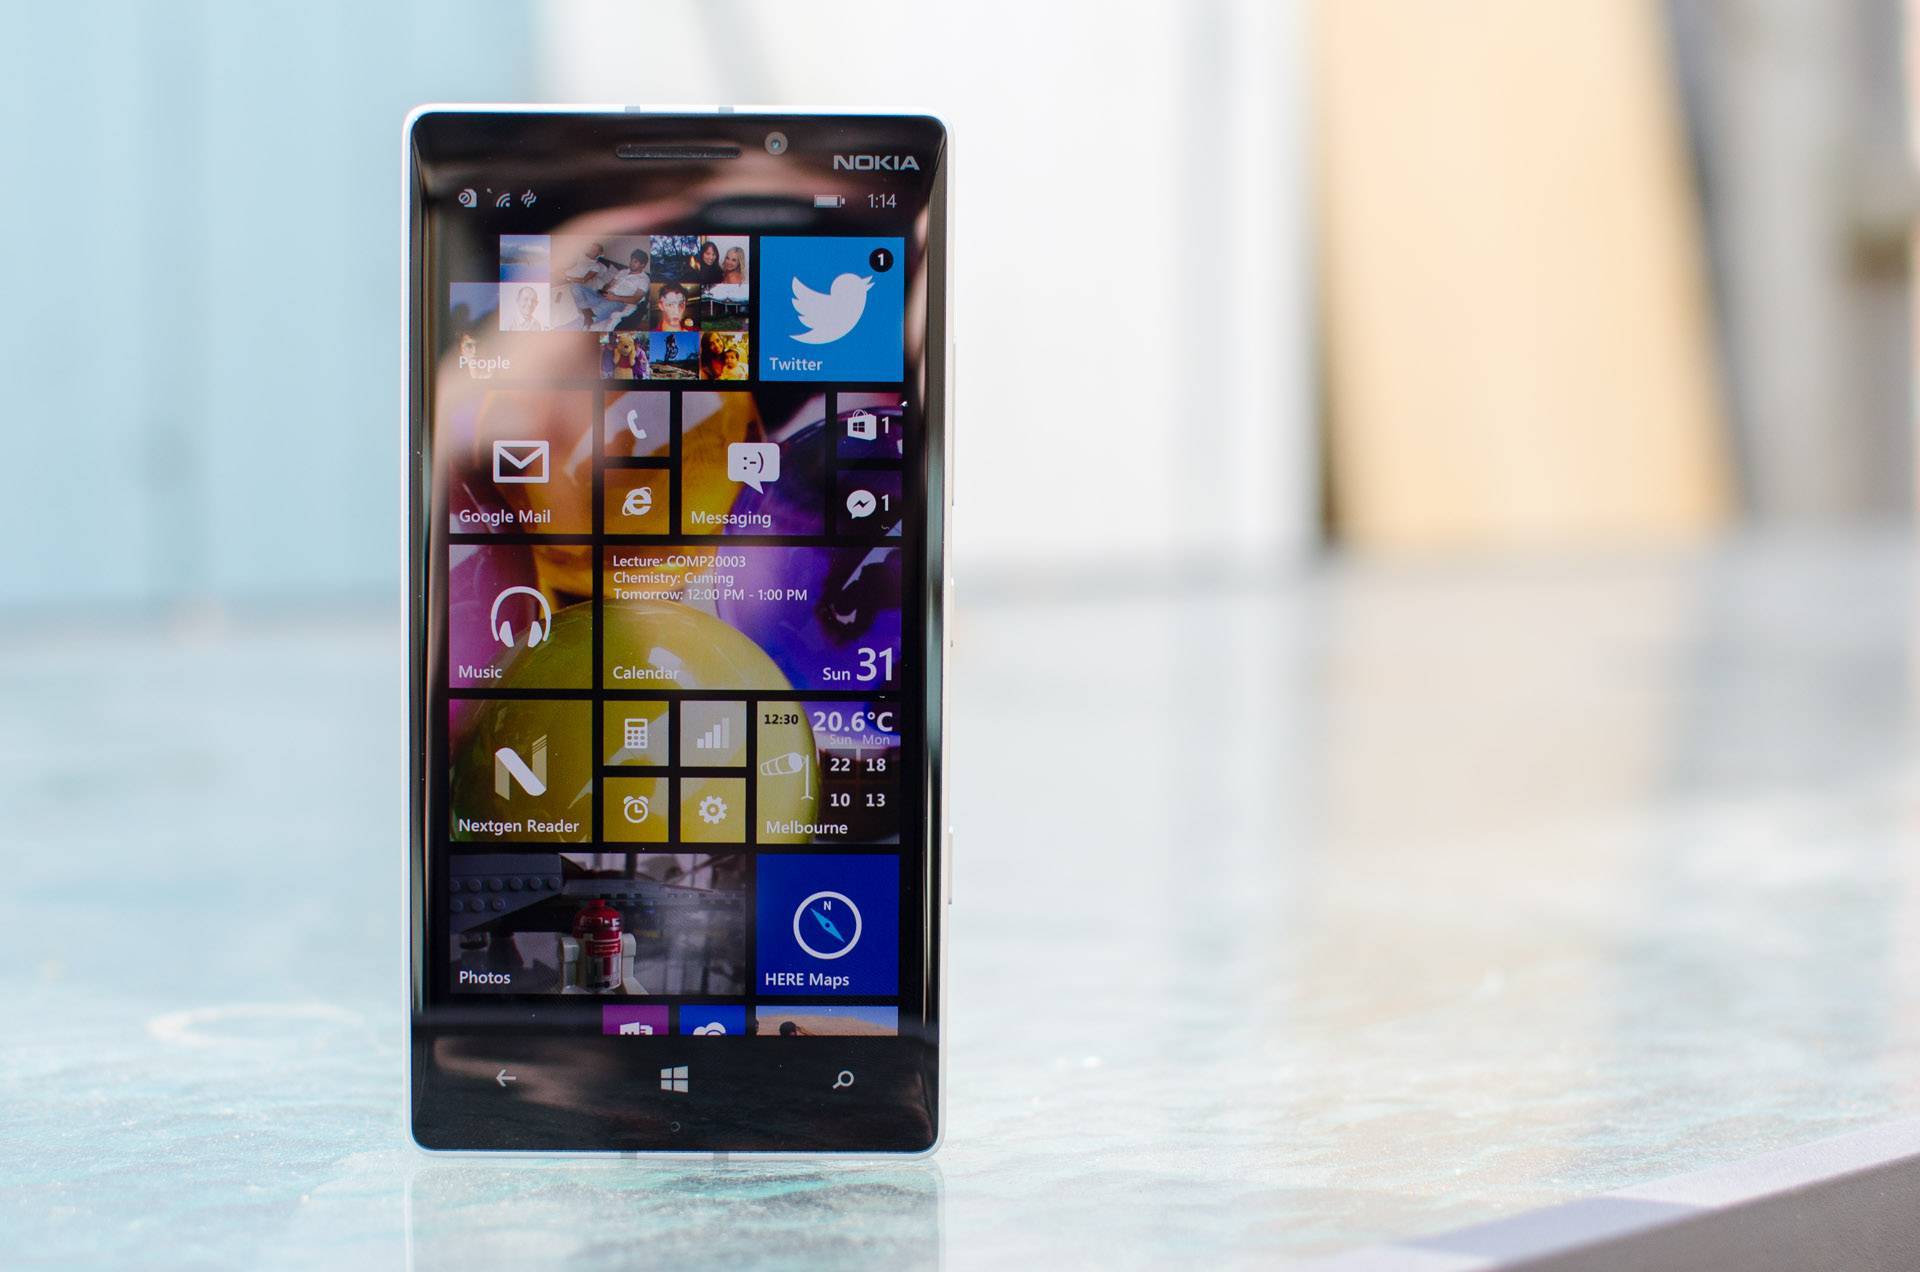 Nokia lumia 930 , описание, технические характеристики, обзор, видеообзор, отзыв о телефоне  nokia lumia 930.